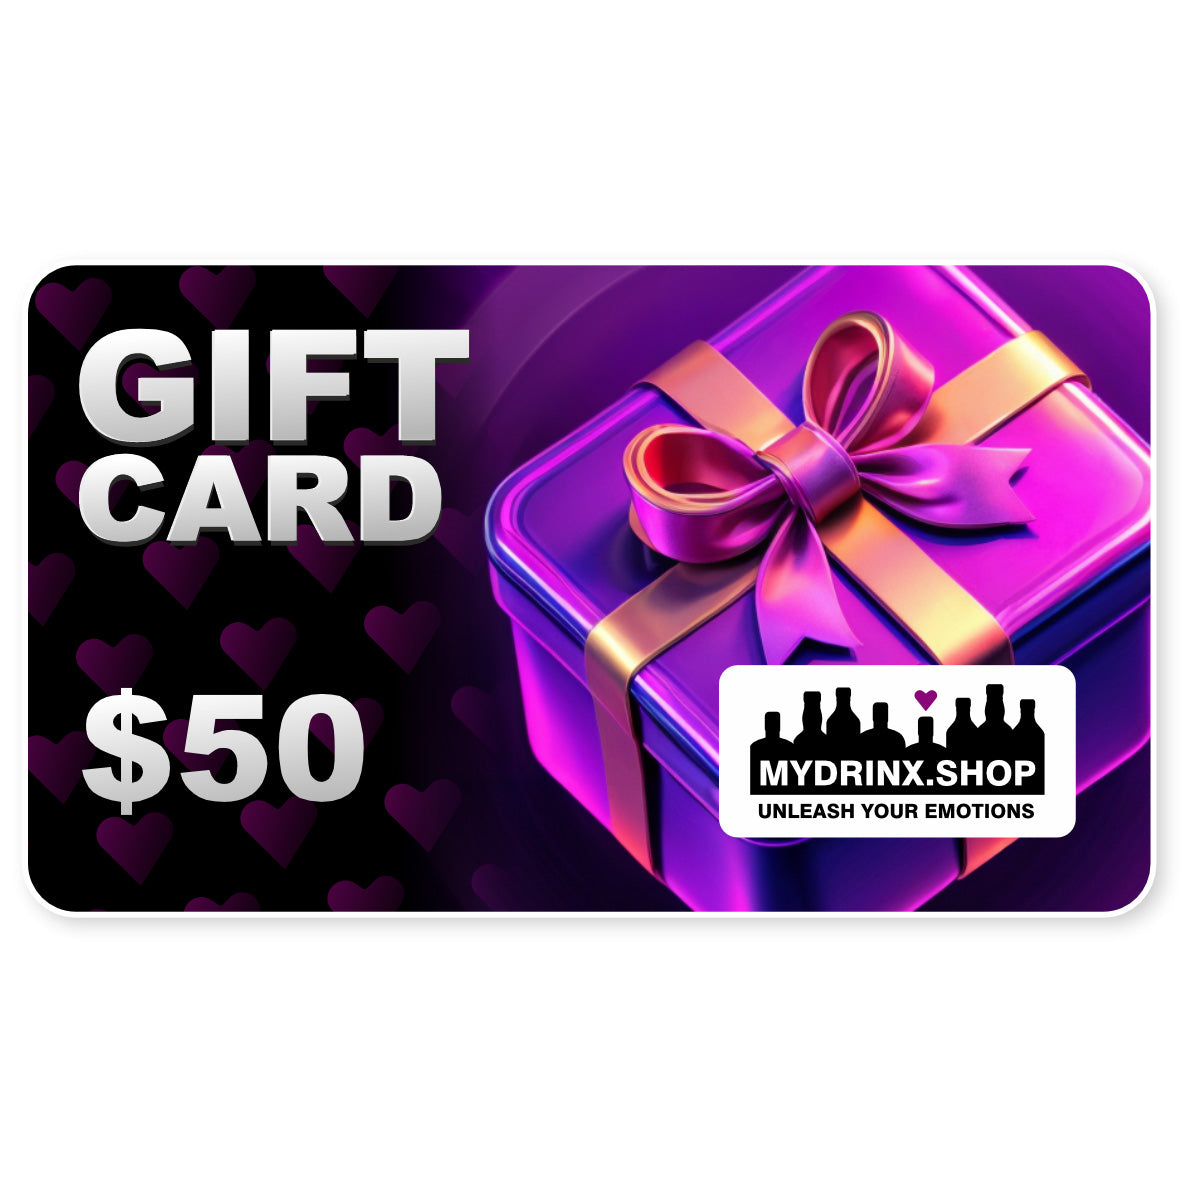 MyDrinx.shop Gift Card $50